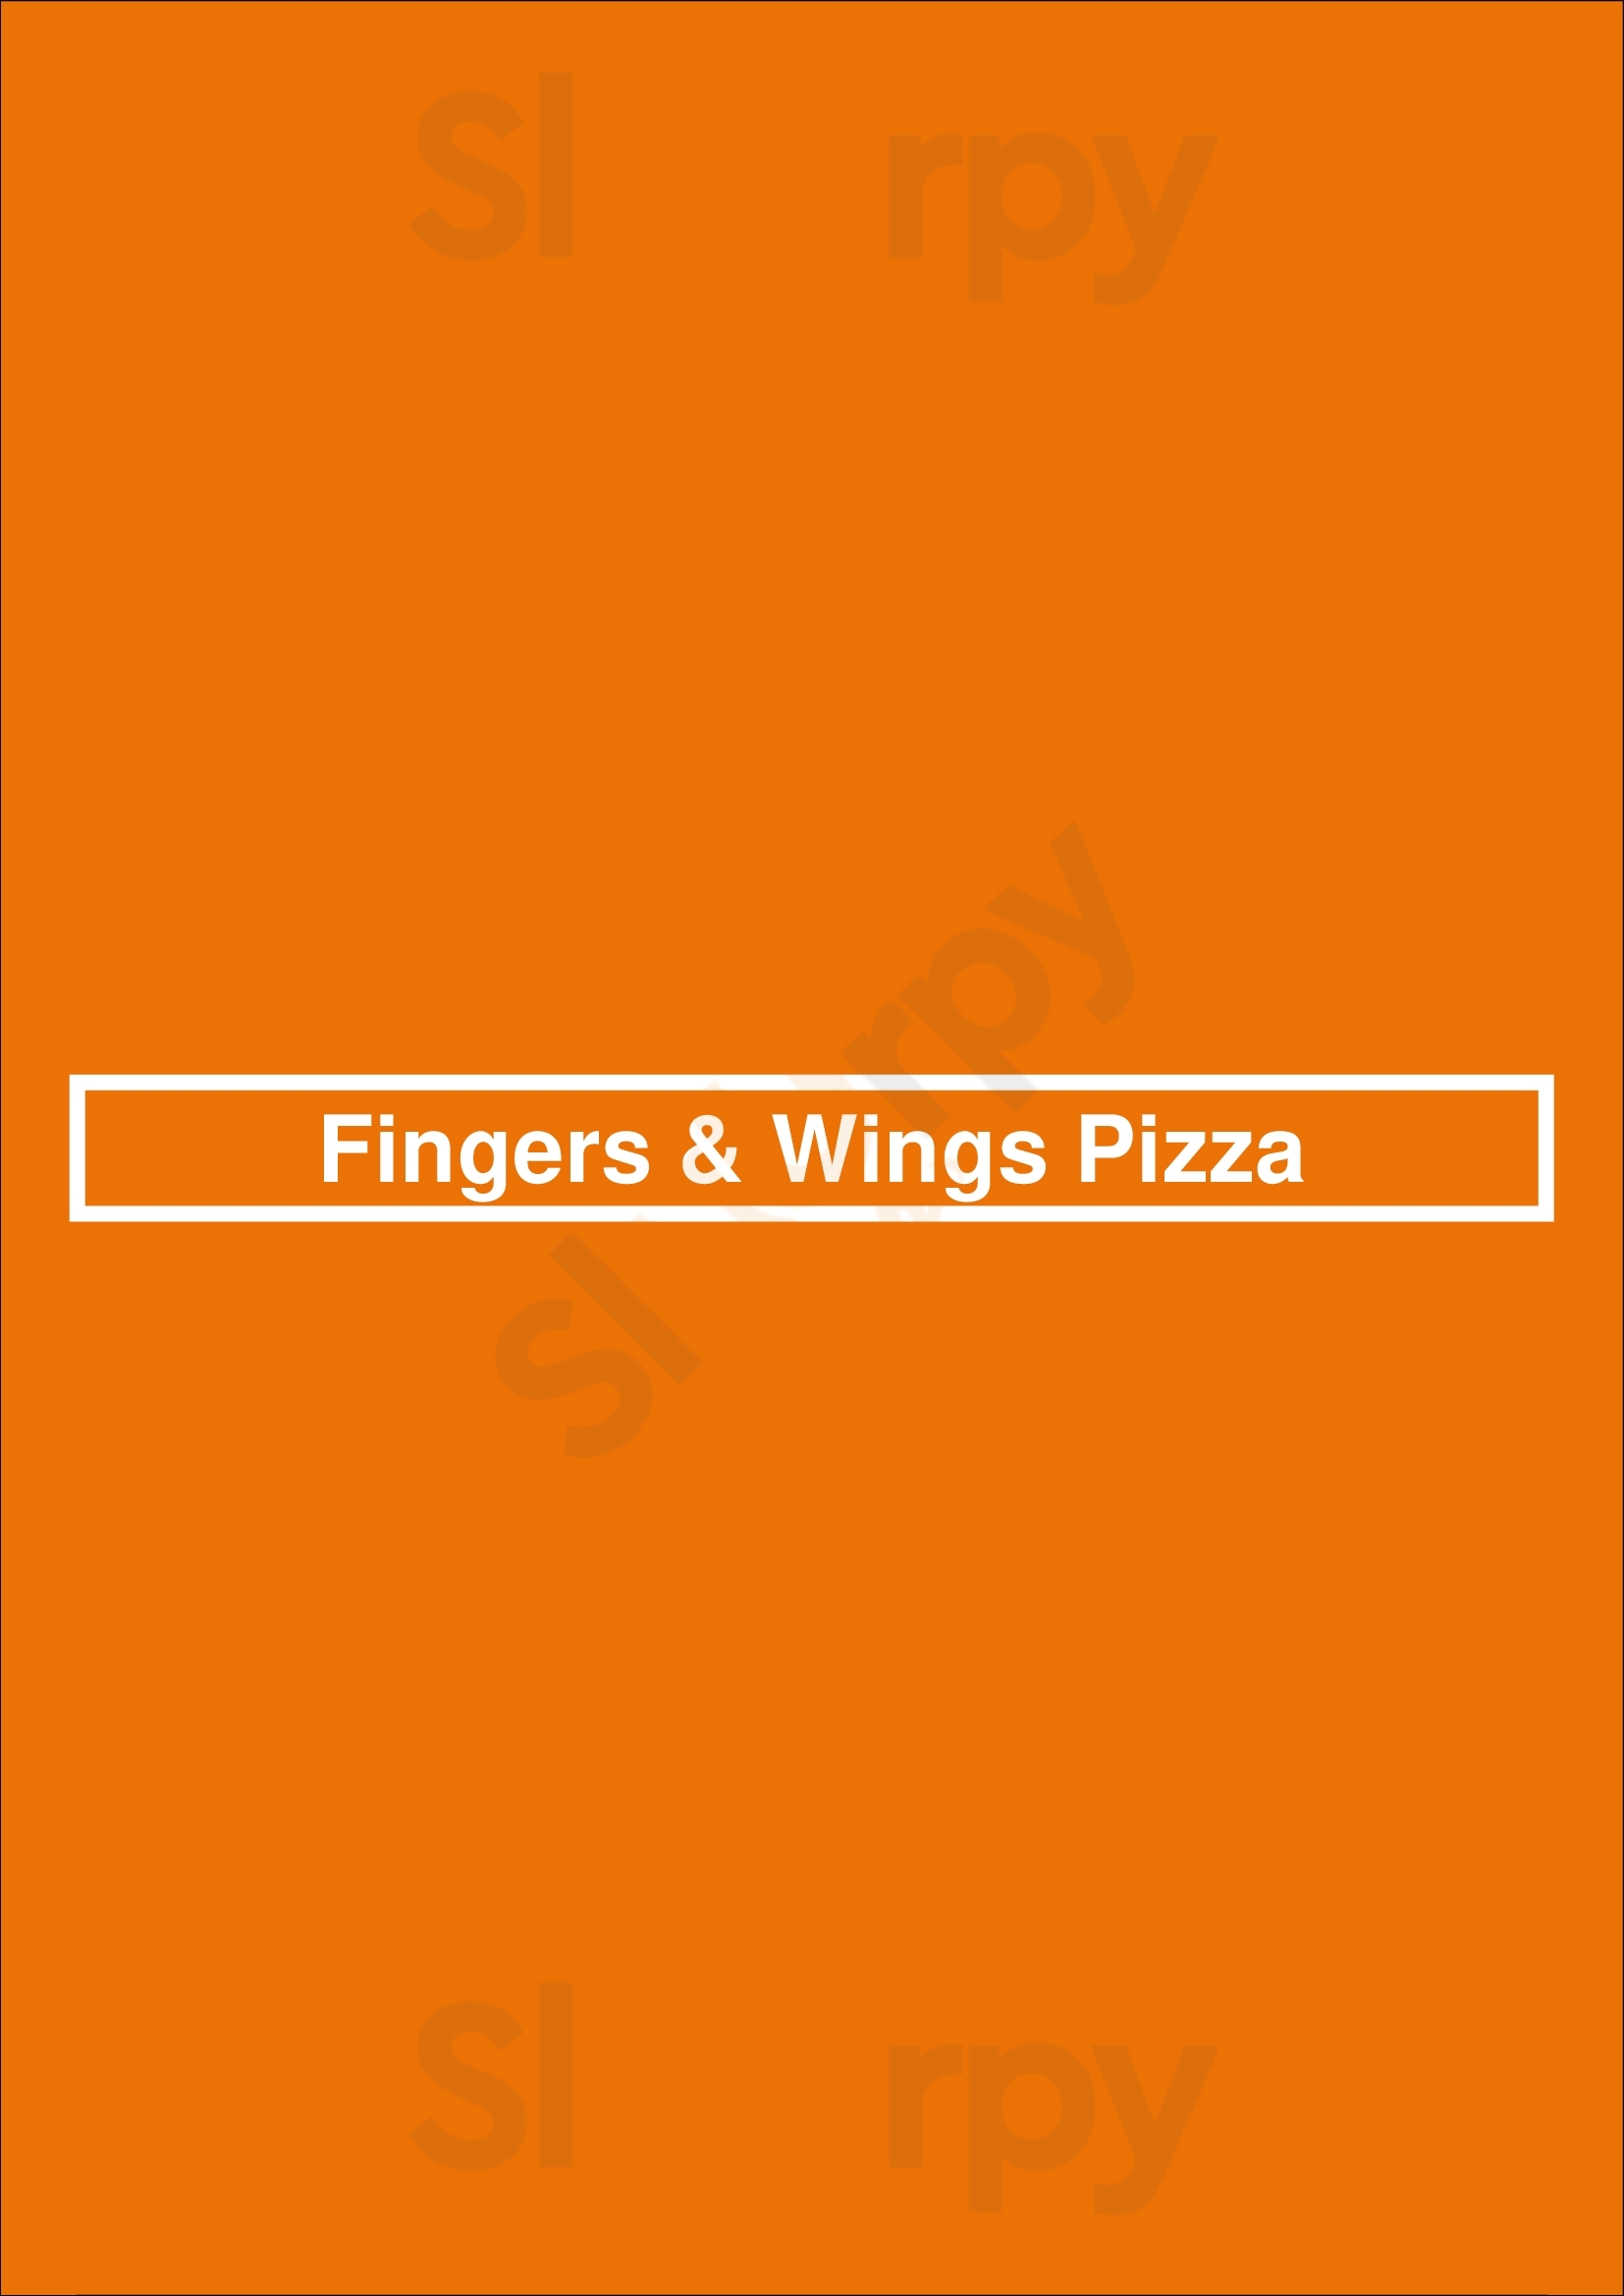 Fingers & Wings Pizza Philadelphia Menu - 1